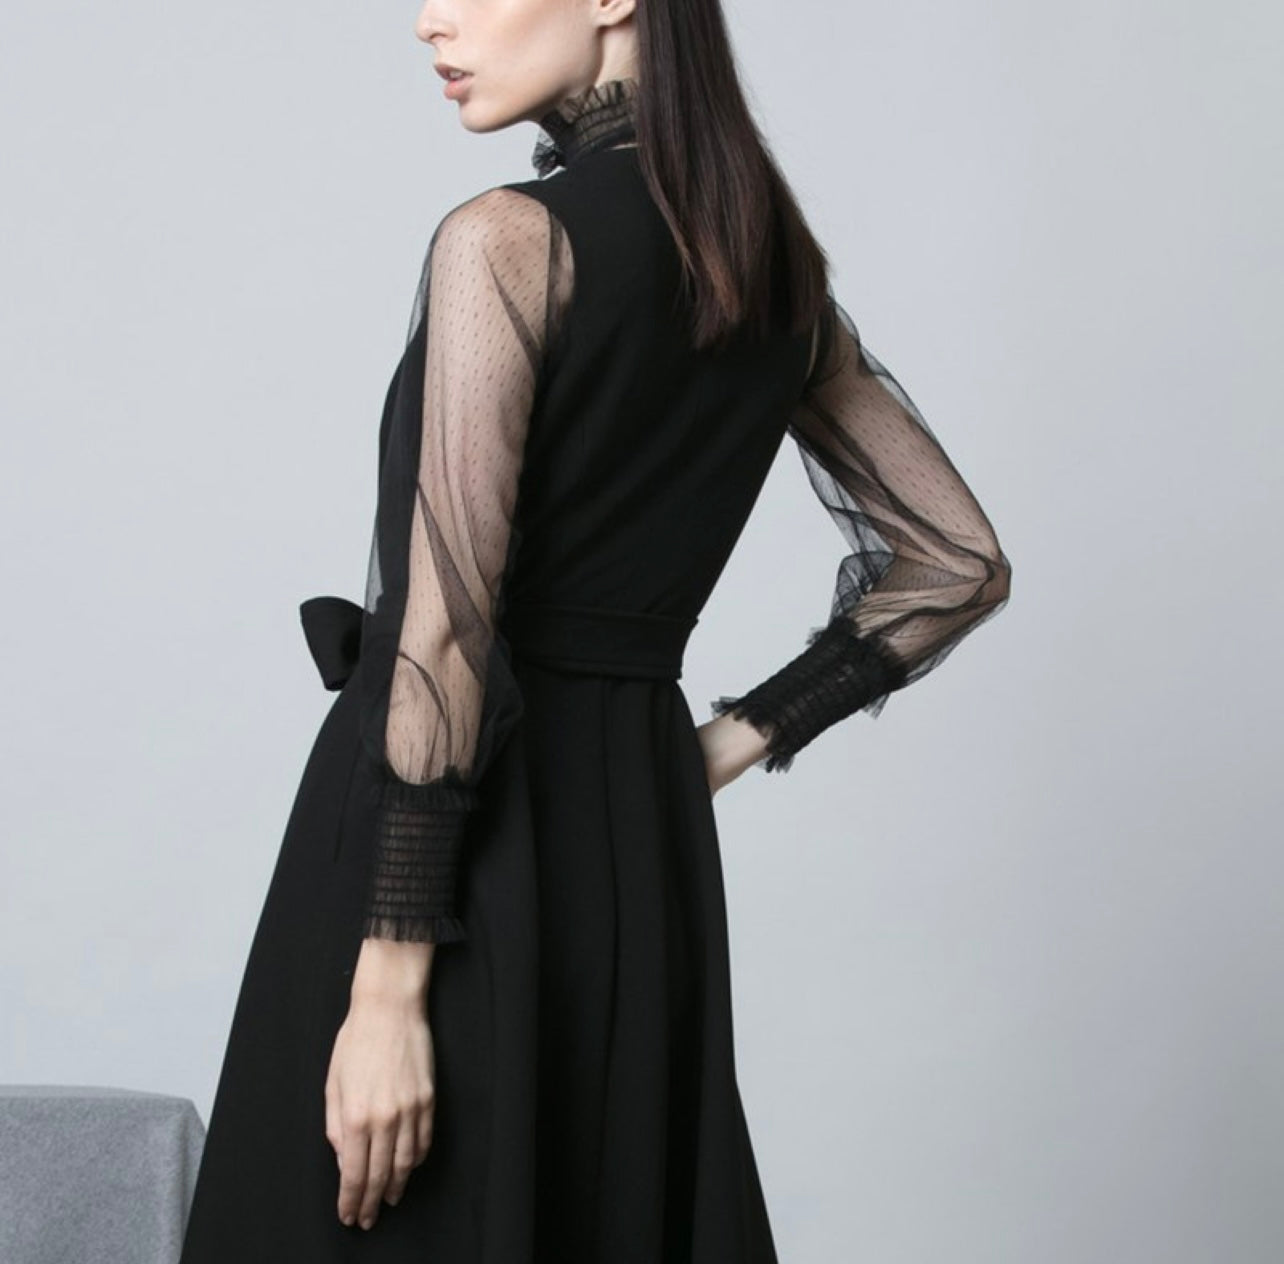 Mesh top with vest dress (Black)